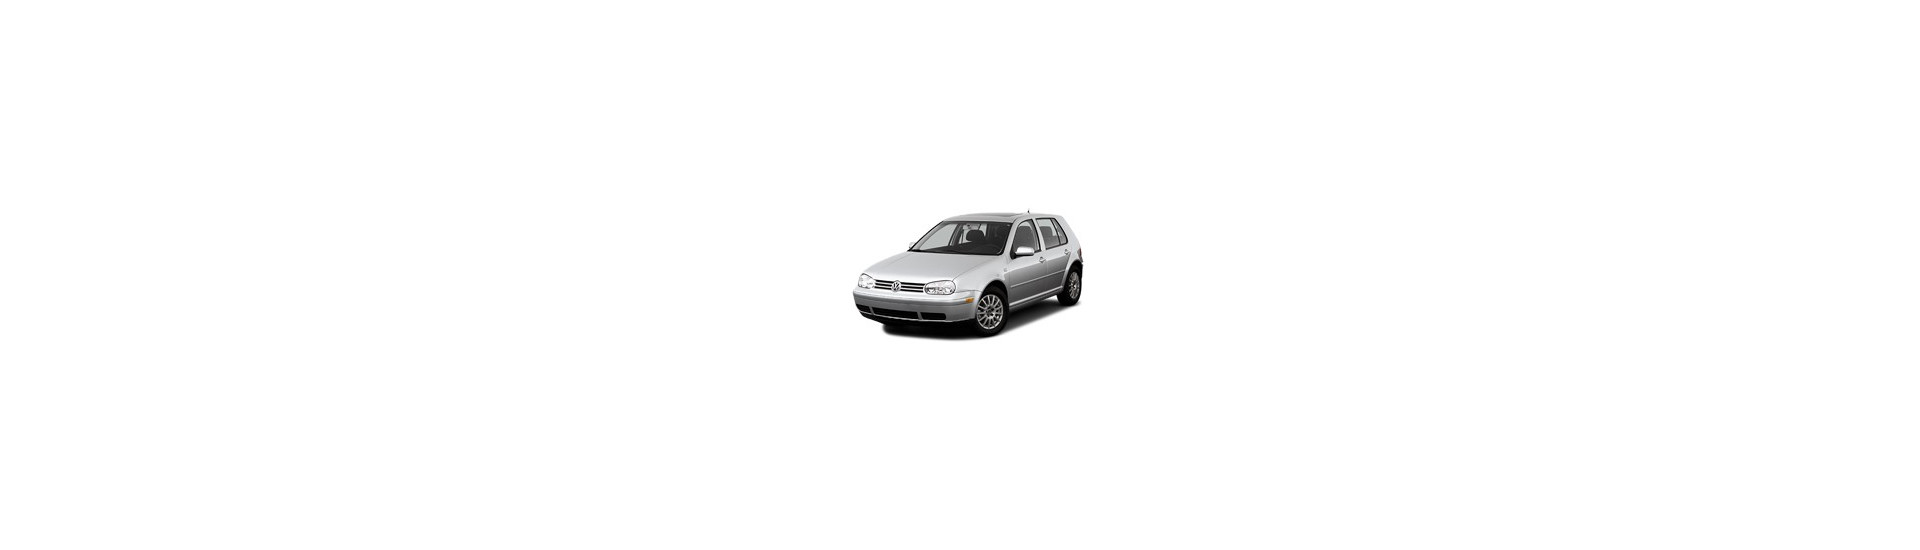 Cauti navigatie dedicata Volkswagen Golf 4? Trebuie sa vedeti oferta caraudiomarket